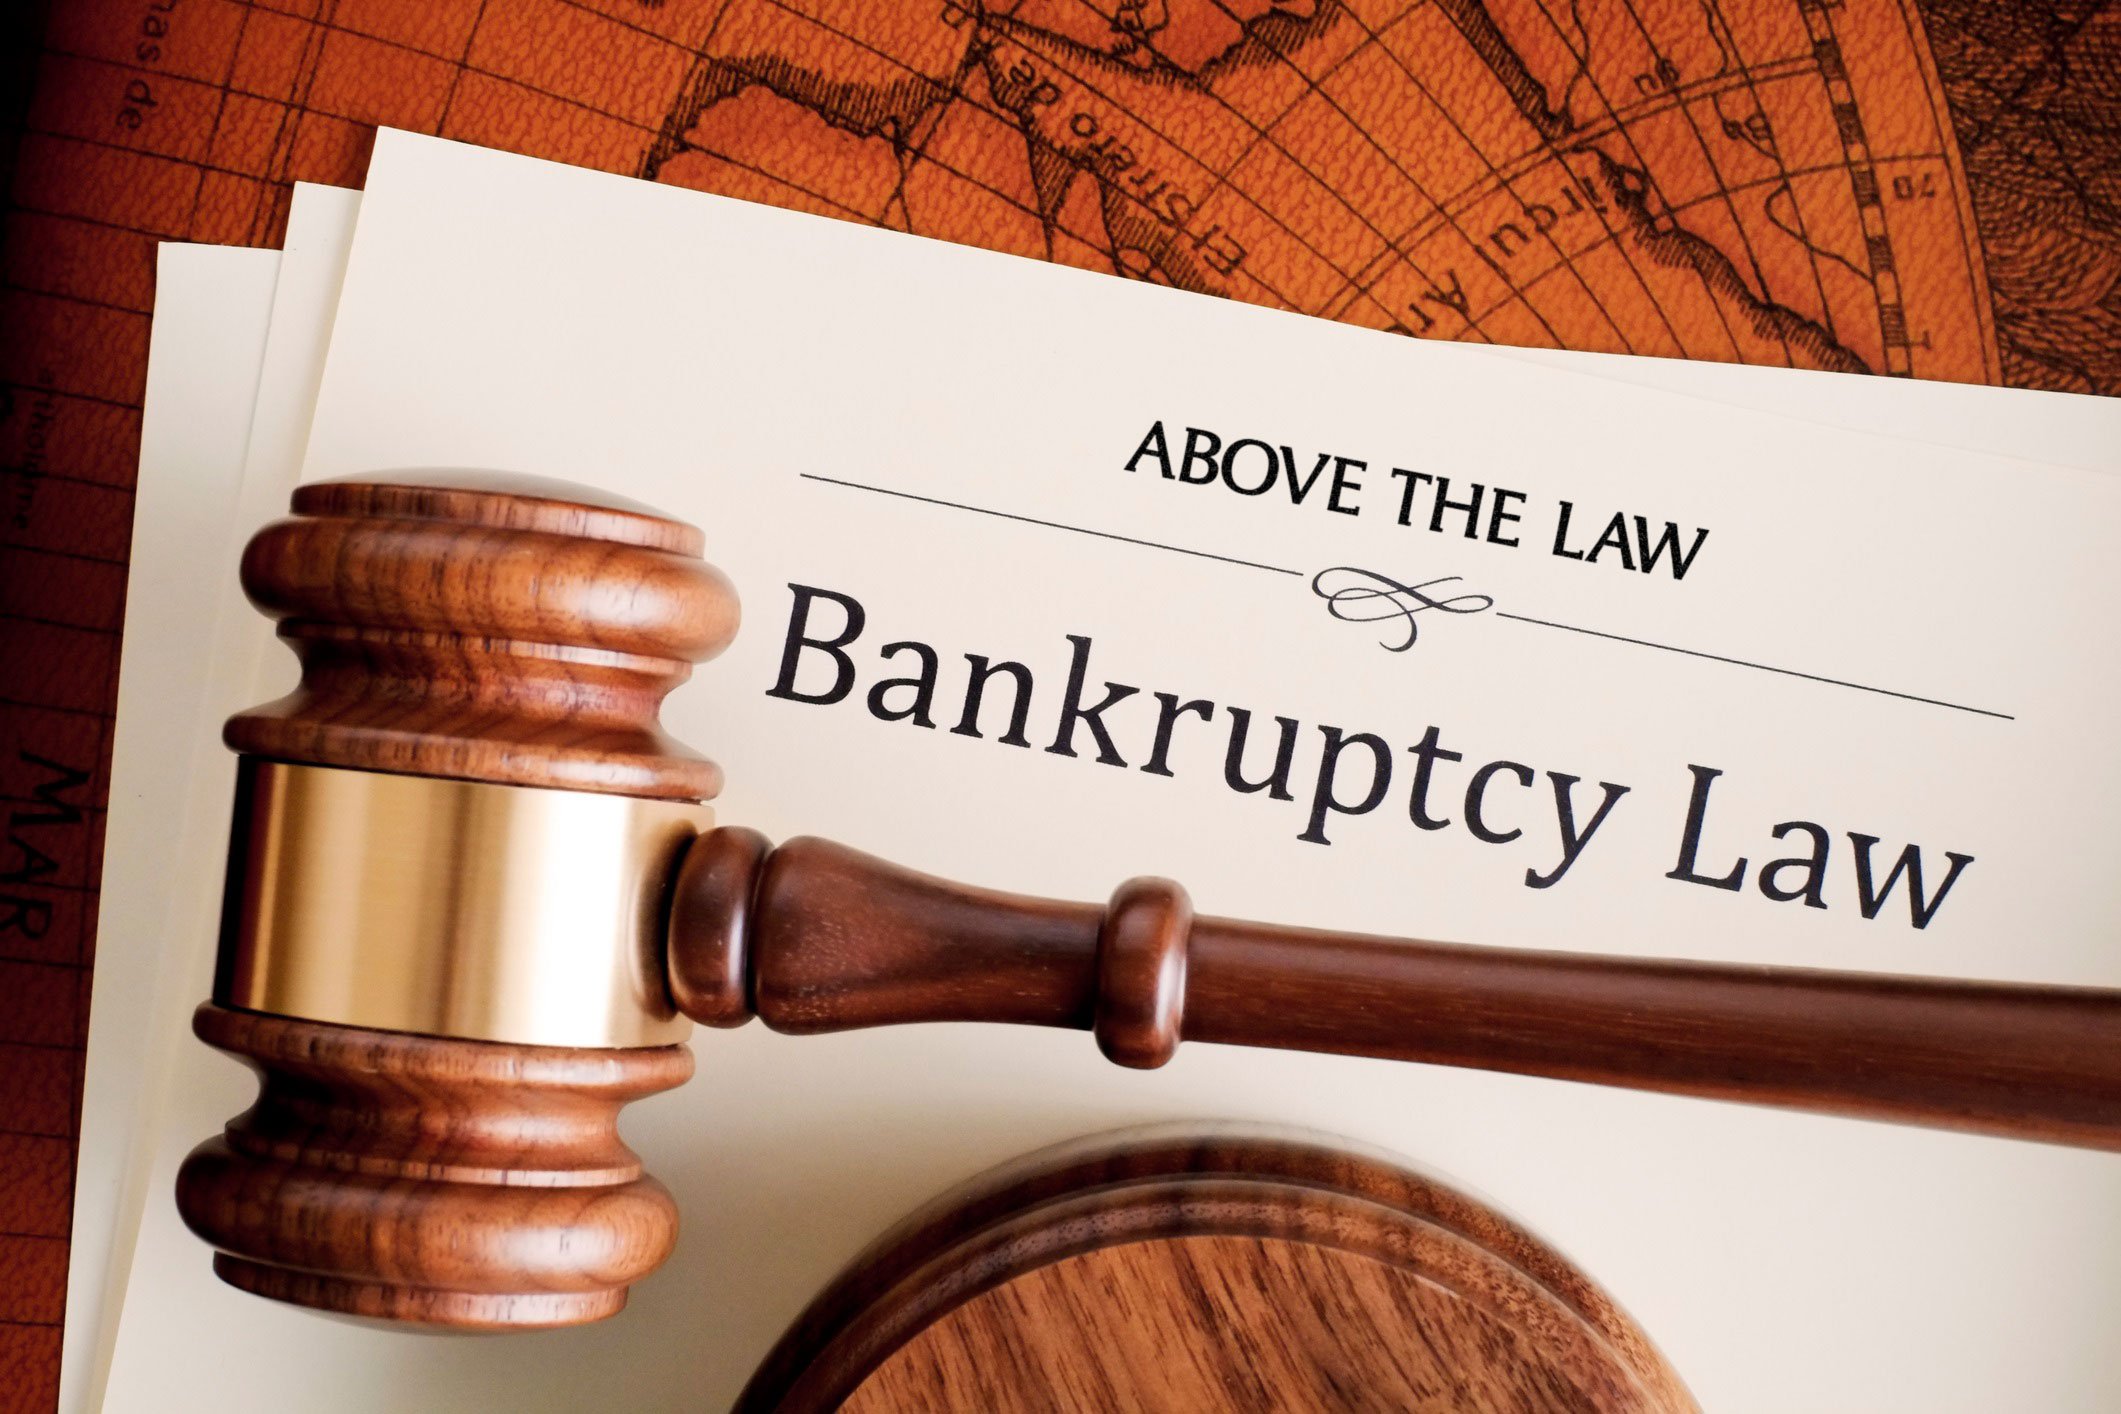 atl-bankruptcy-law-jumbo-1.jpg